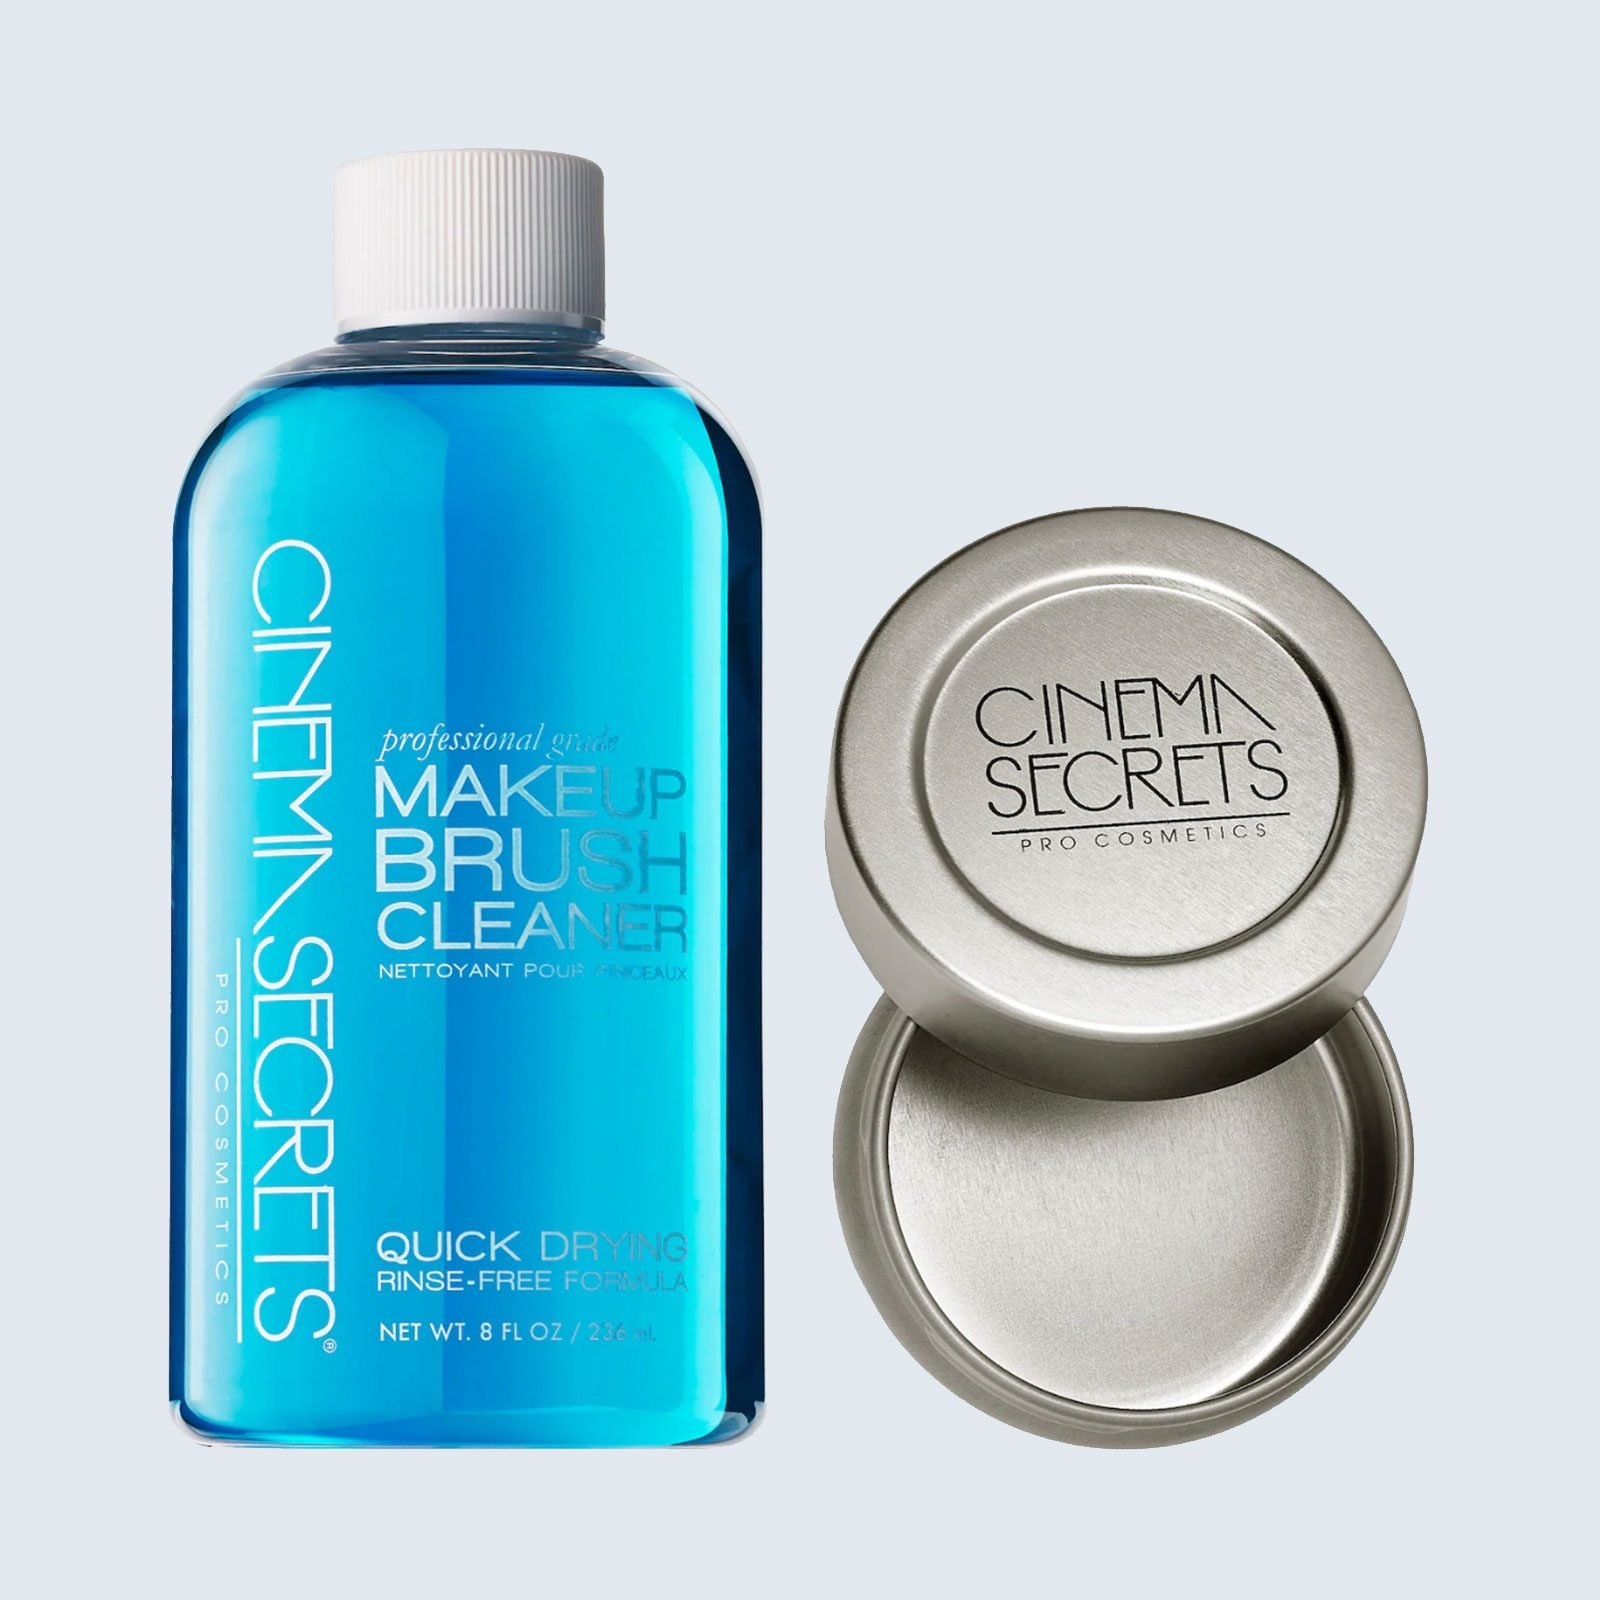 Best antimicrobial makeup brush cleaner: Cinema Secrets Makeup Brush Cleaner Kit